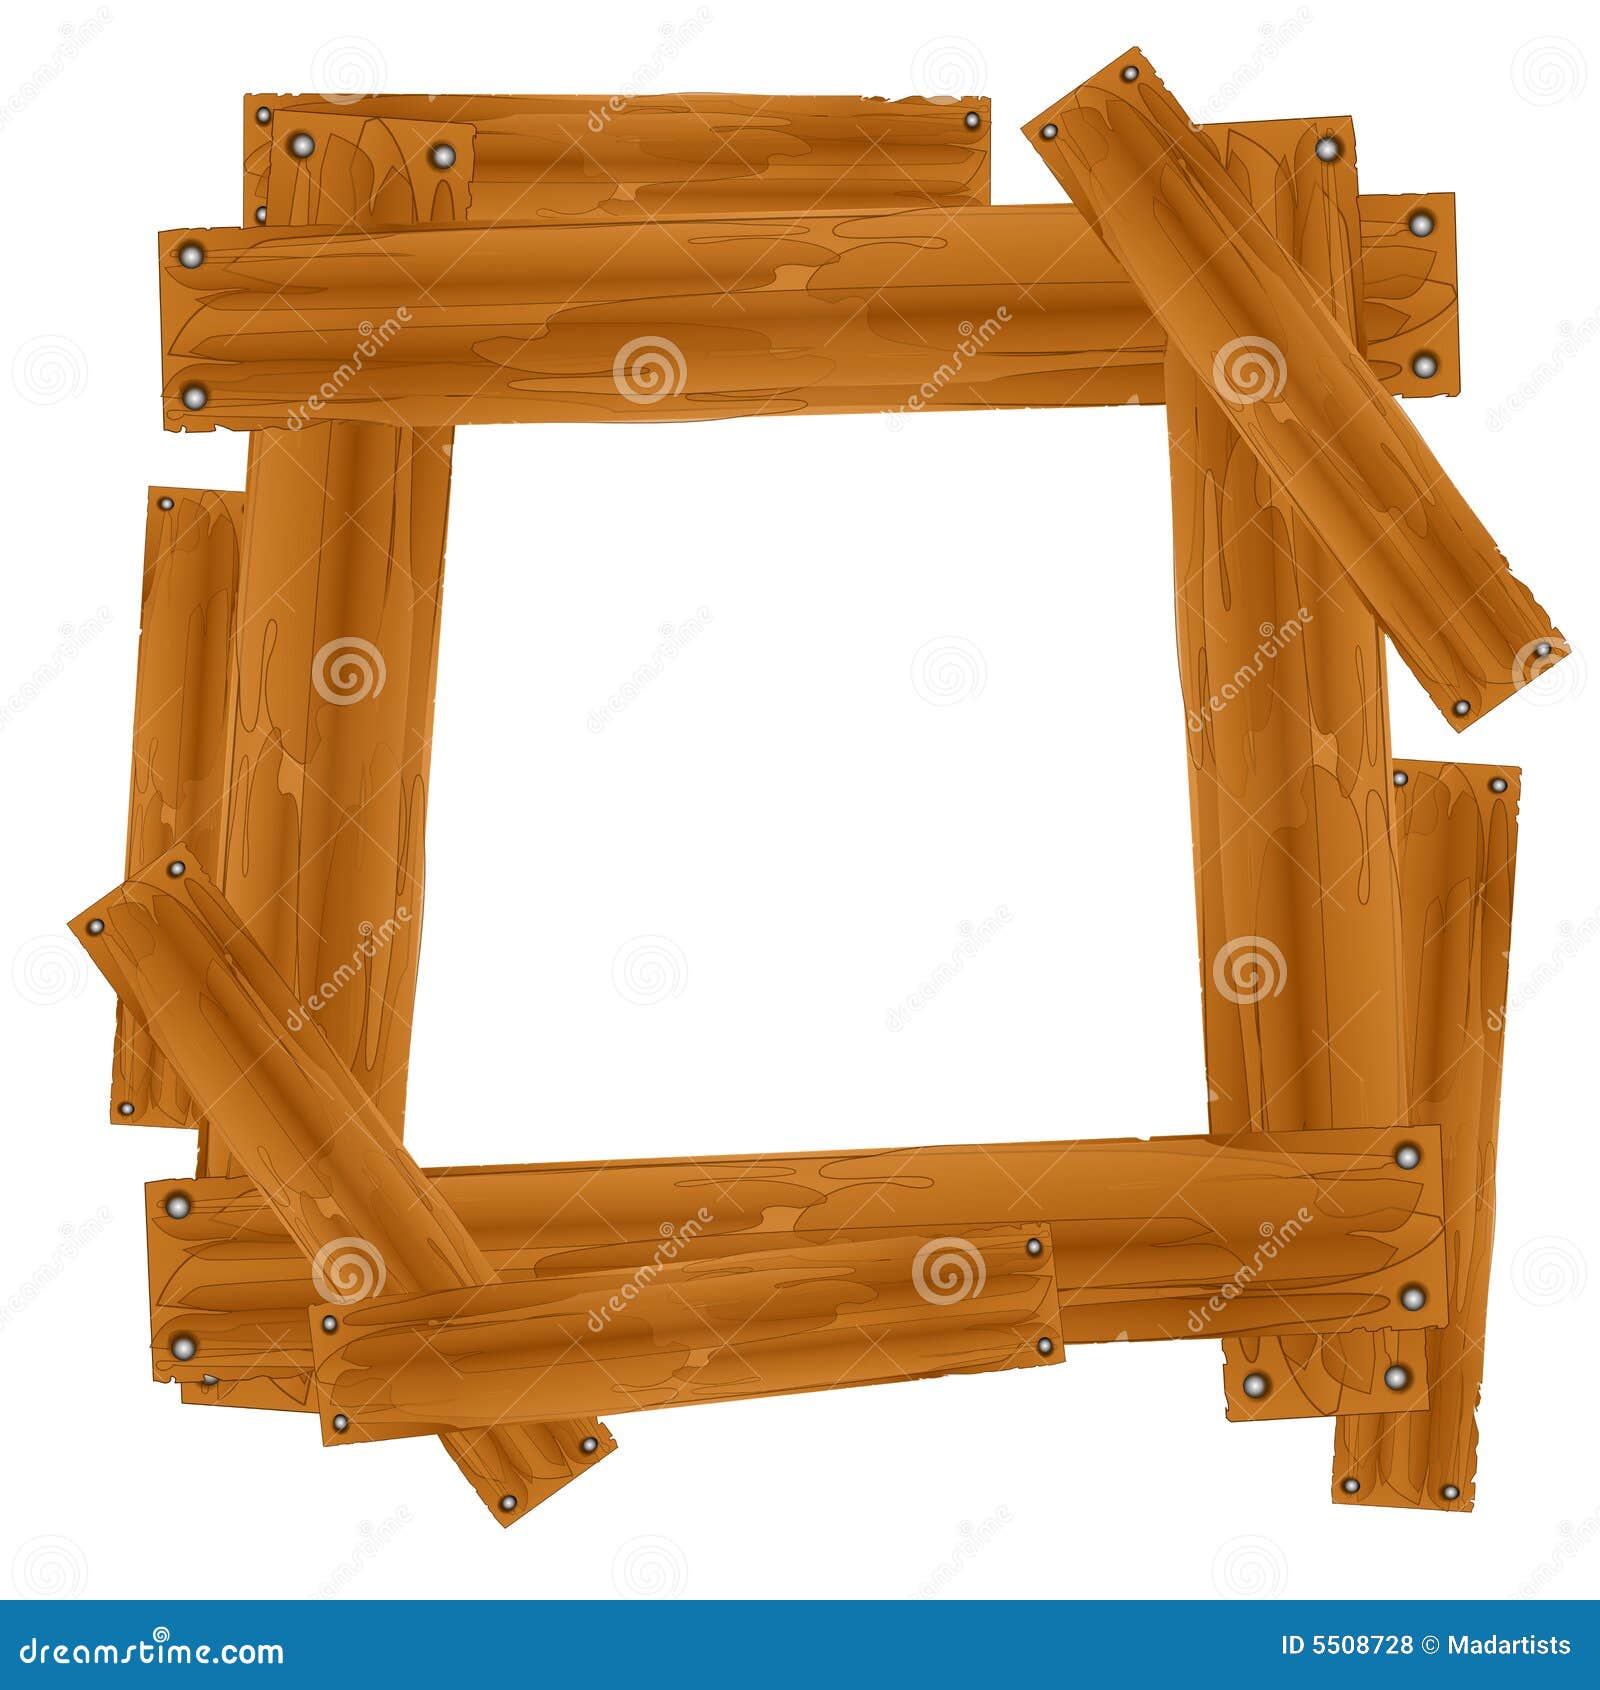 Wooden Plank Frame Border stock illustration. Image of 